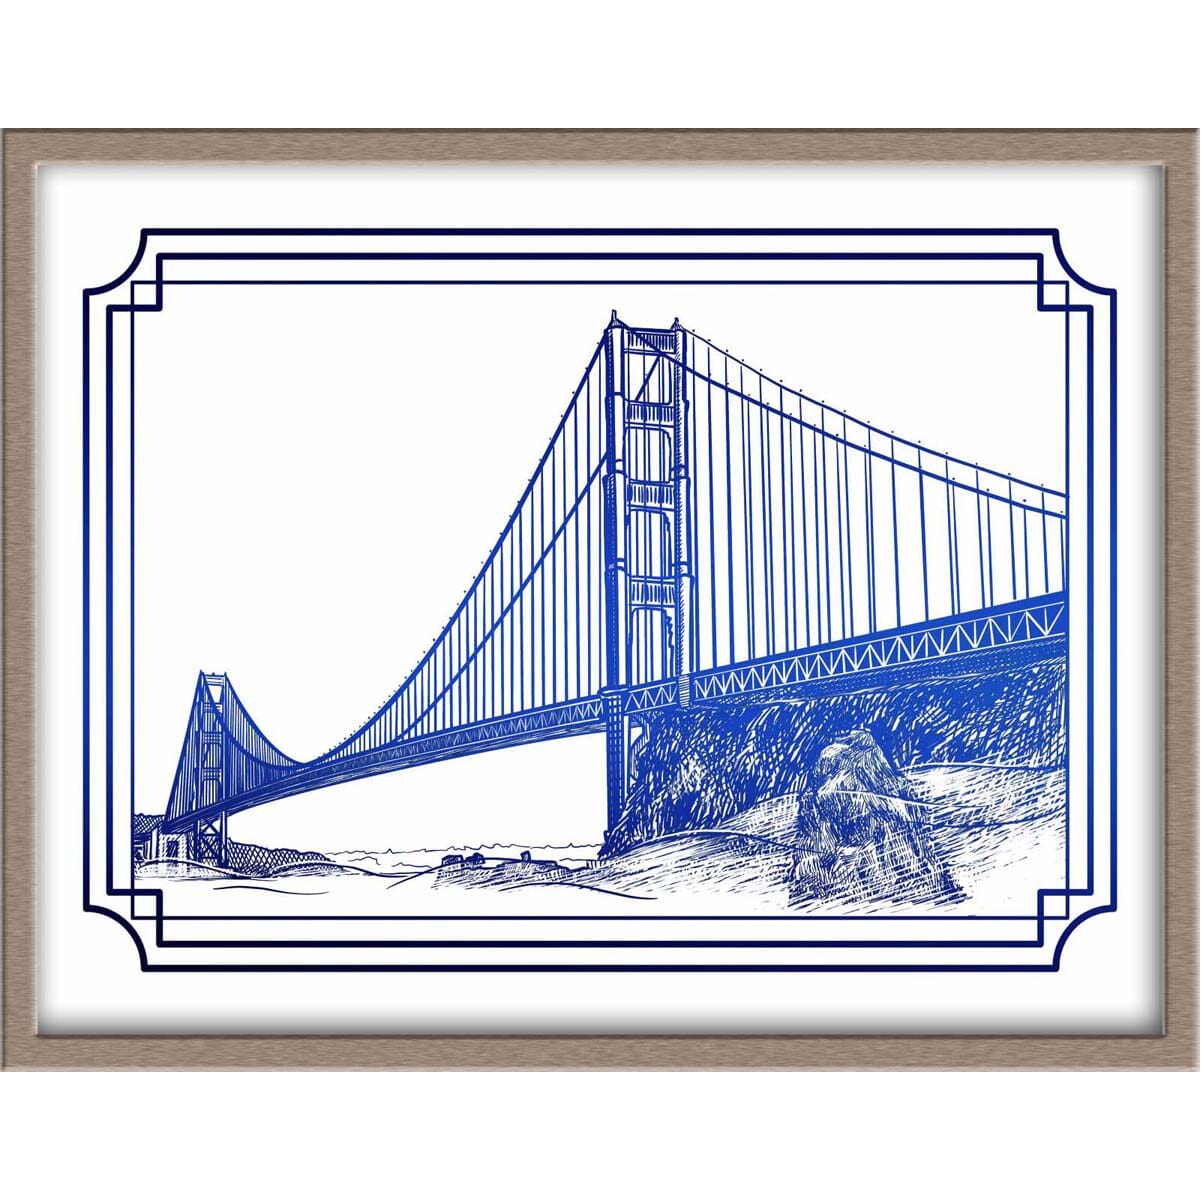 San Francisco's Golden Gate Bridge Landmark Foiled Print Posters, Prints, & Visual Artwork JoyousJoyfulJoyness 